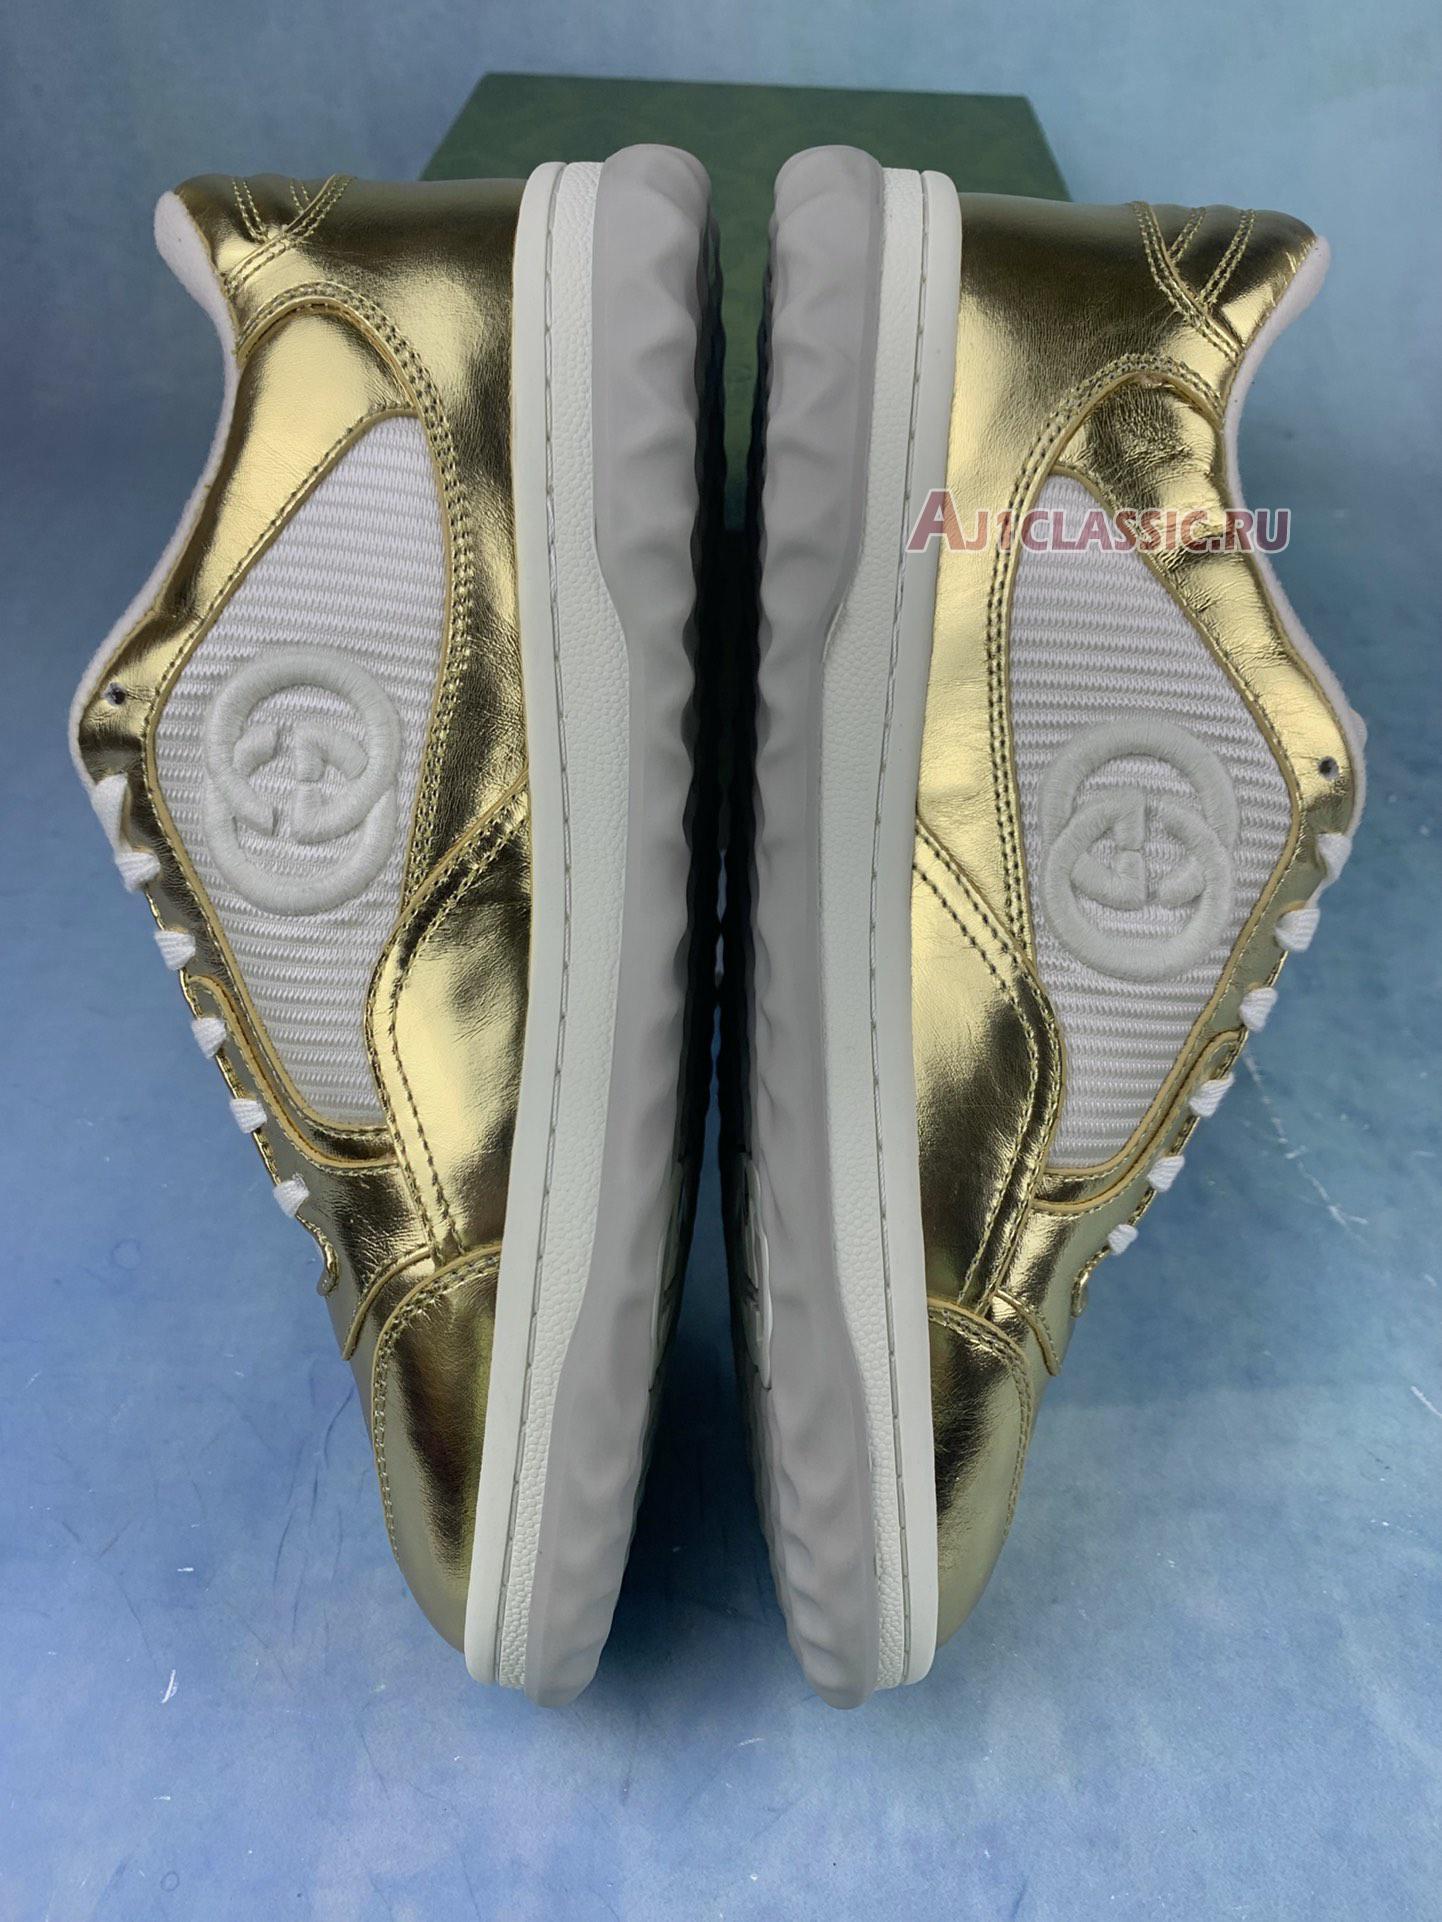 Gucci MAC80 Sneaker "Gold" 750834 AACA9 8044